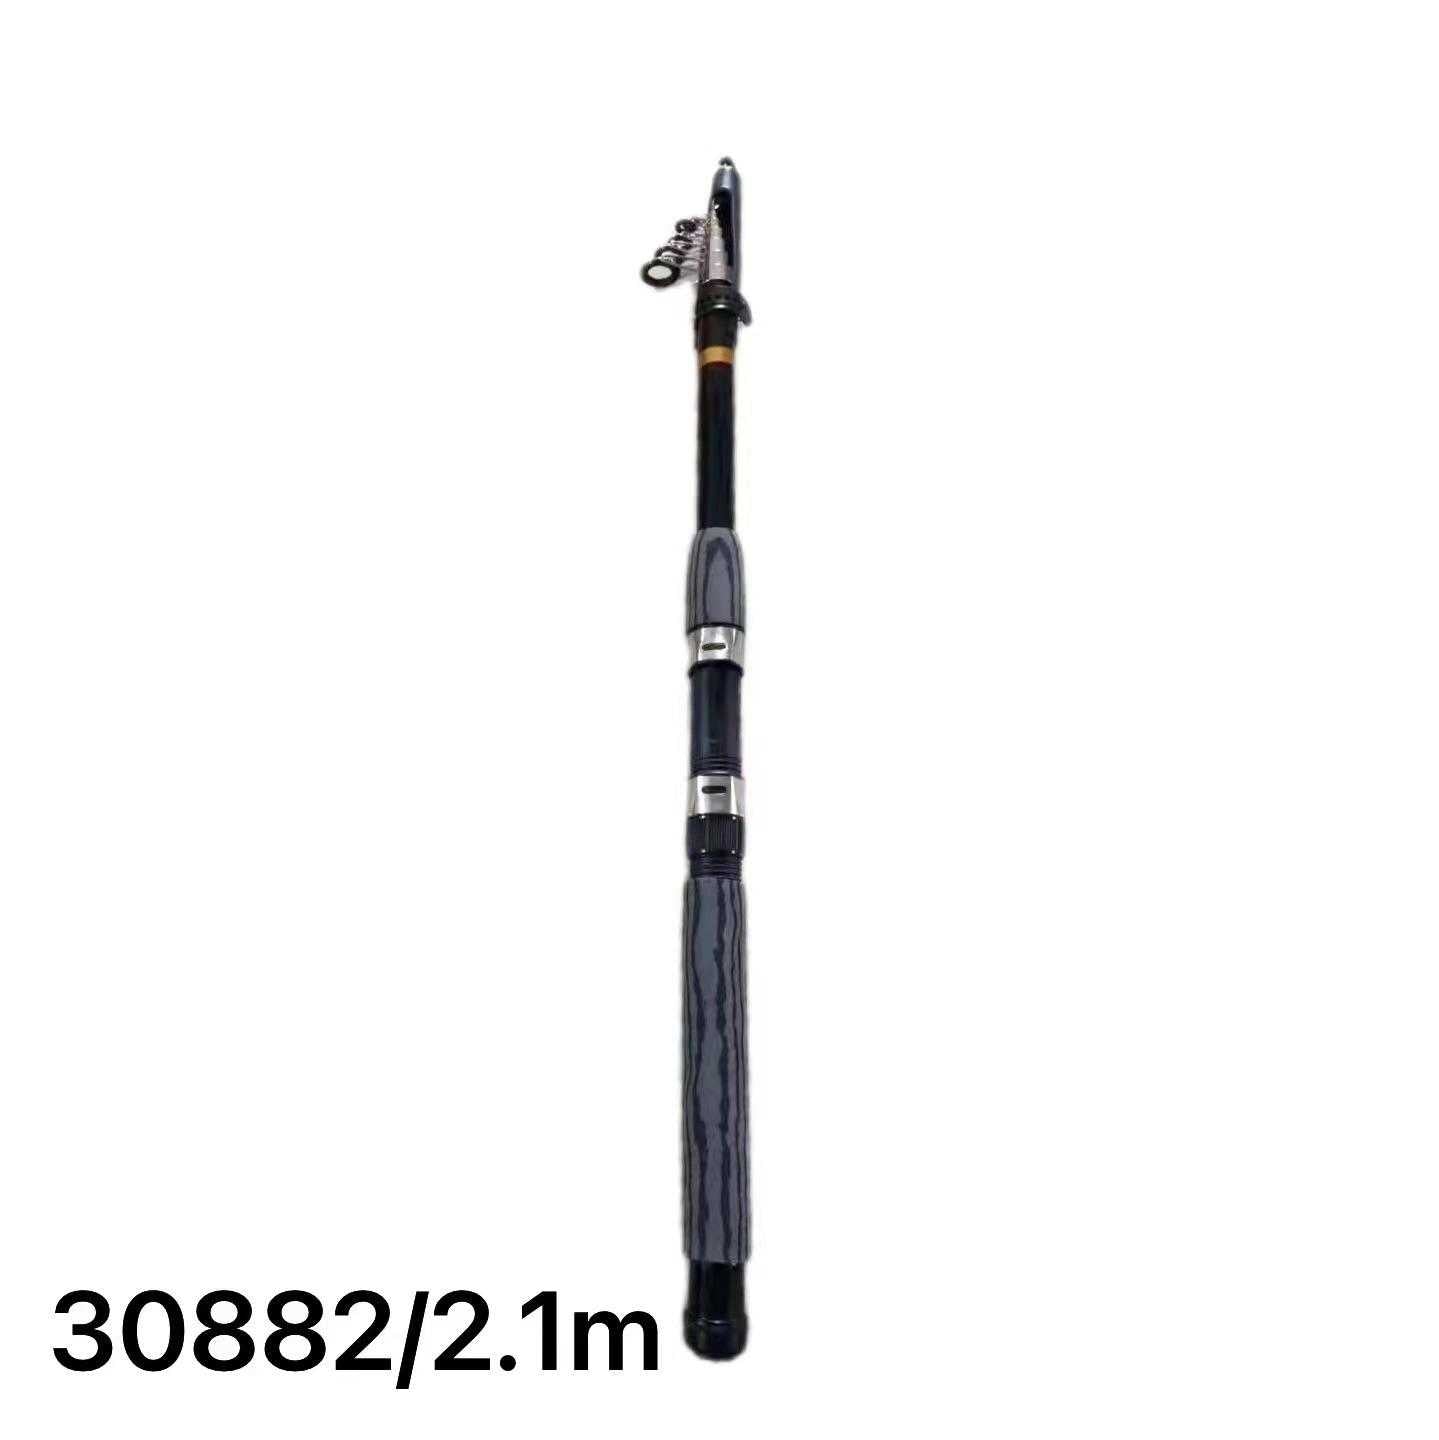 Fishing rod - Telescopic - 2.1m - 30882